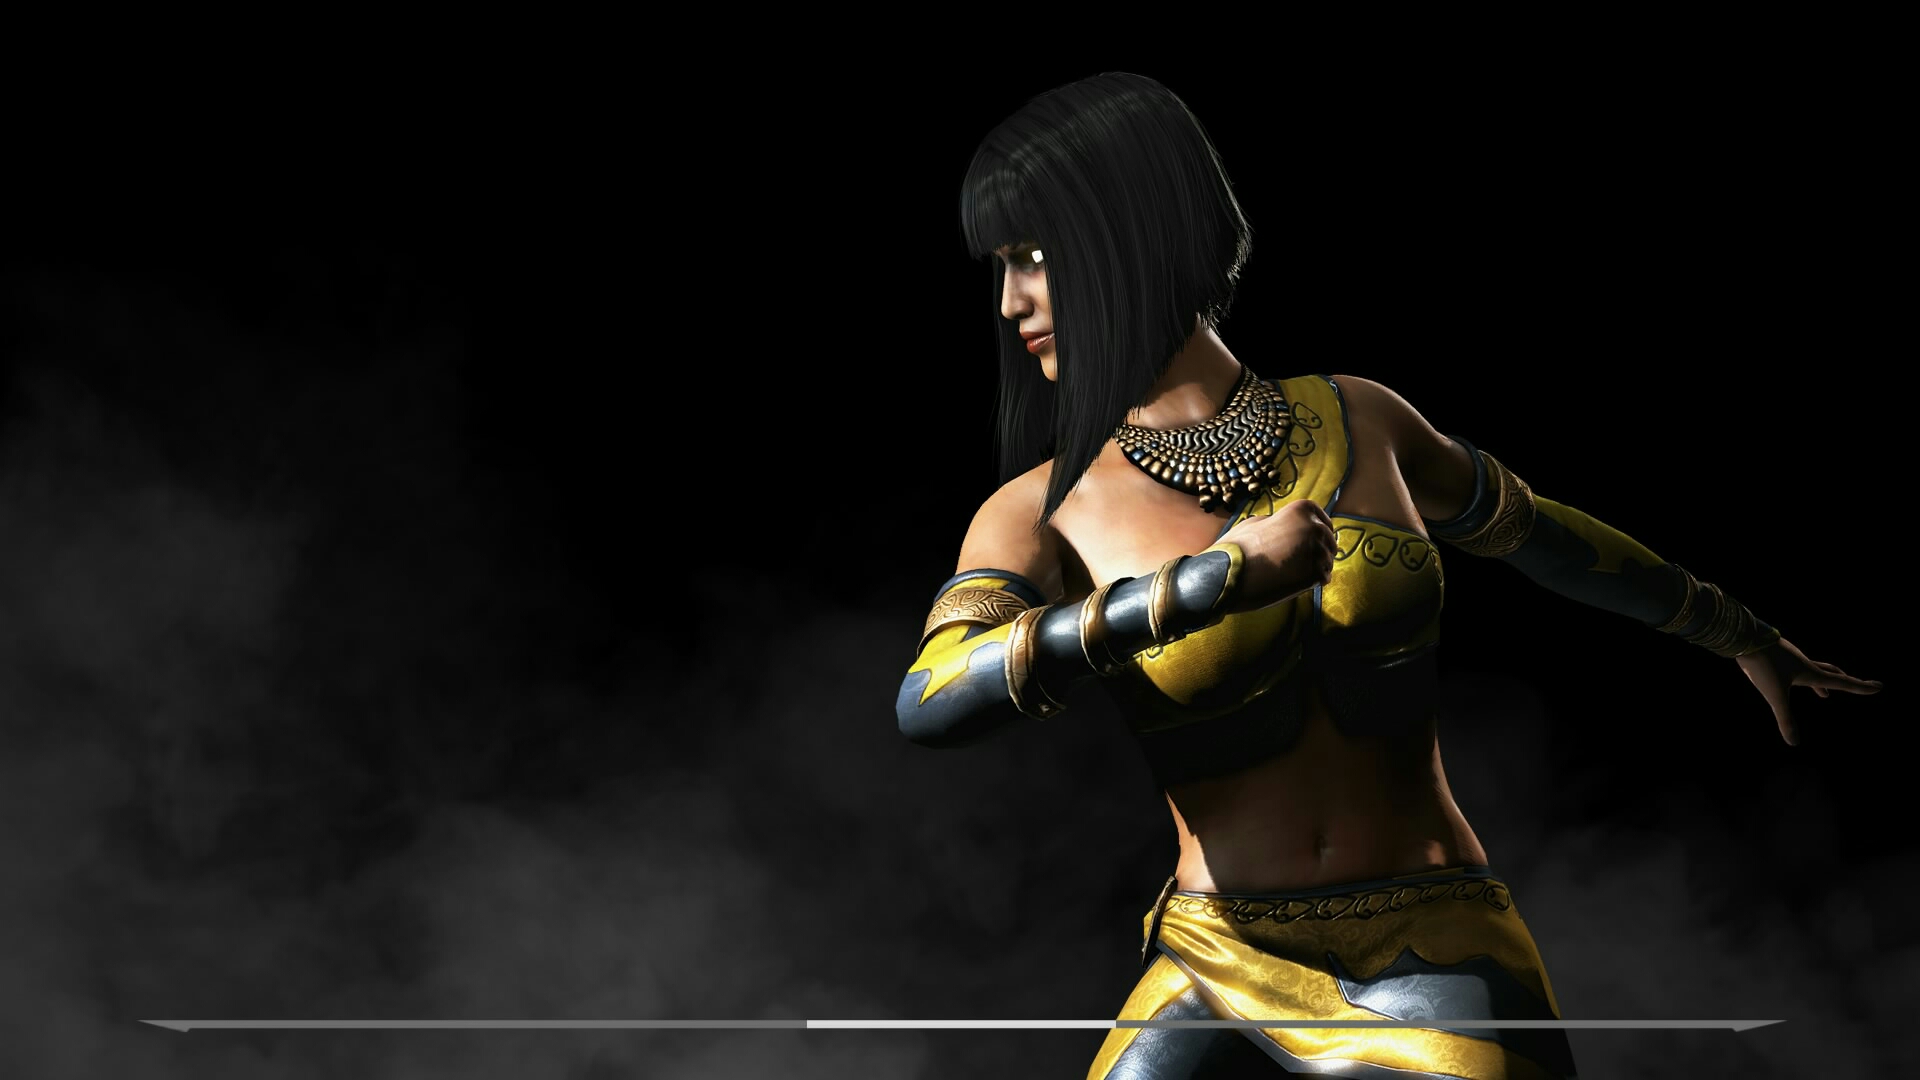 Tanya joins Mortal Kombat X   Nerd Reactor